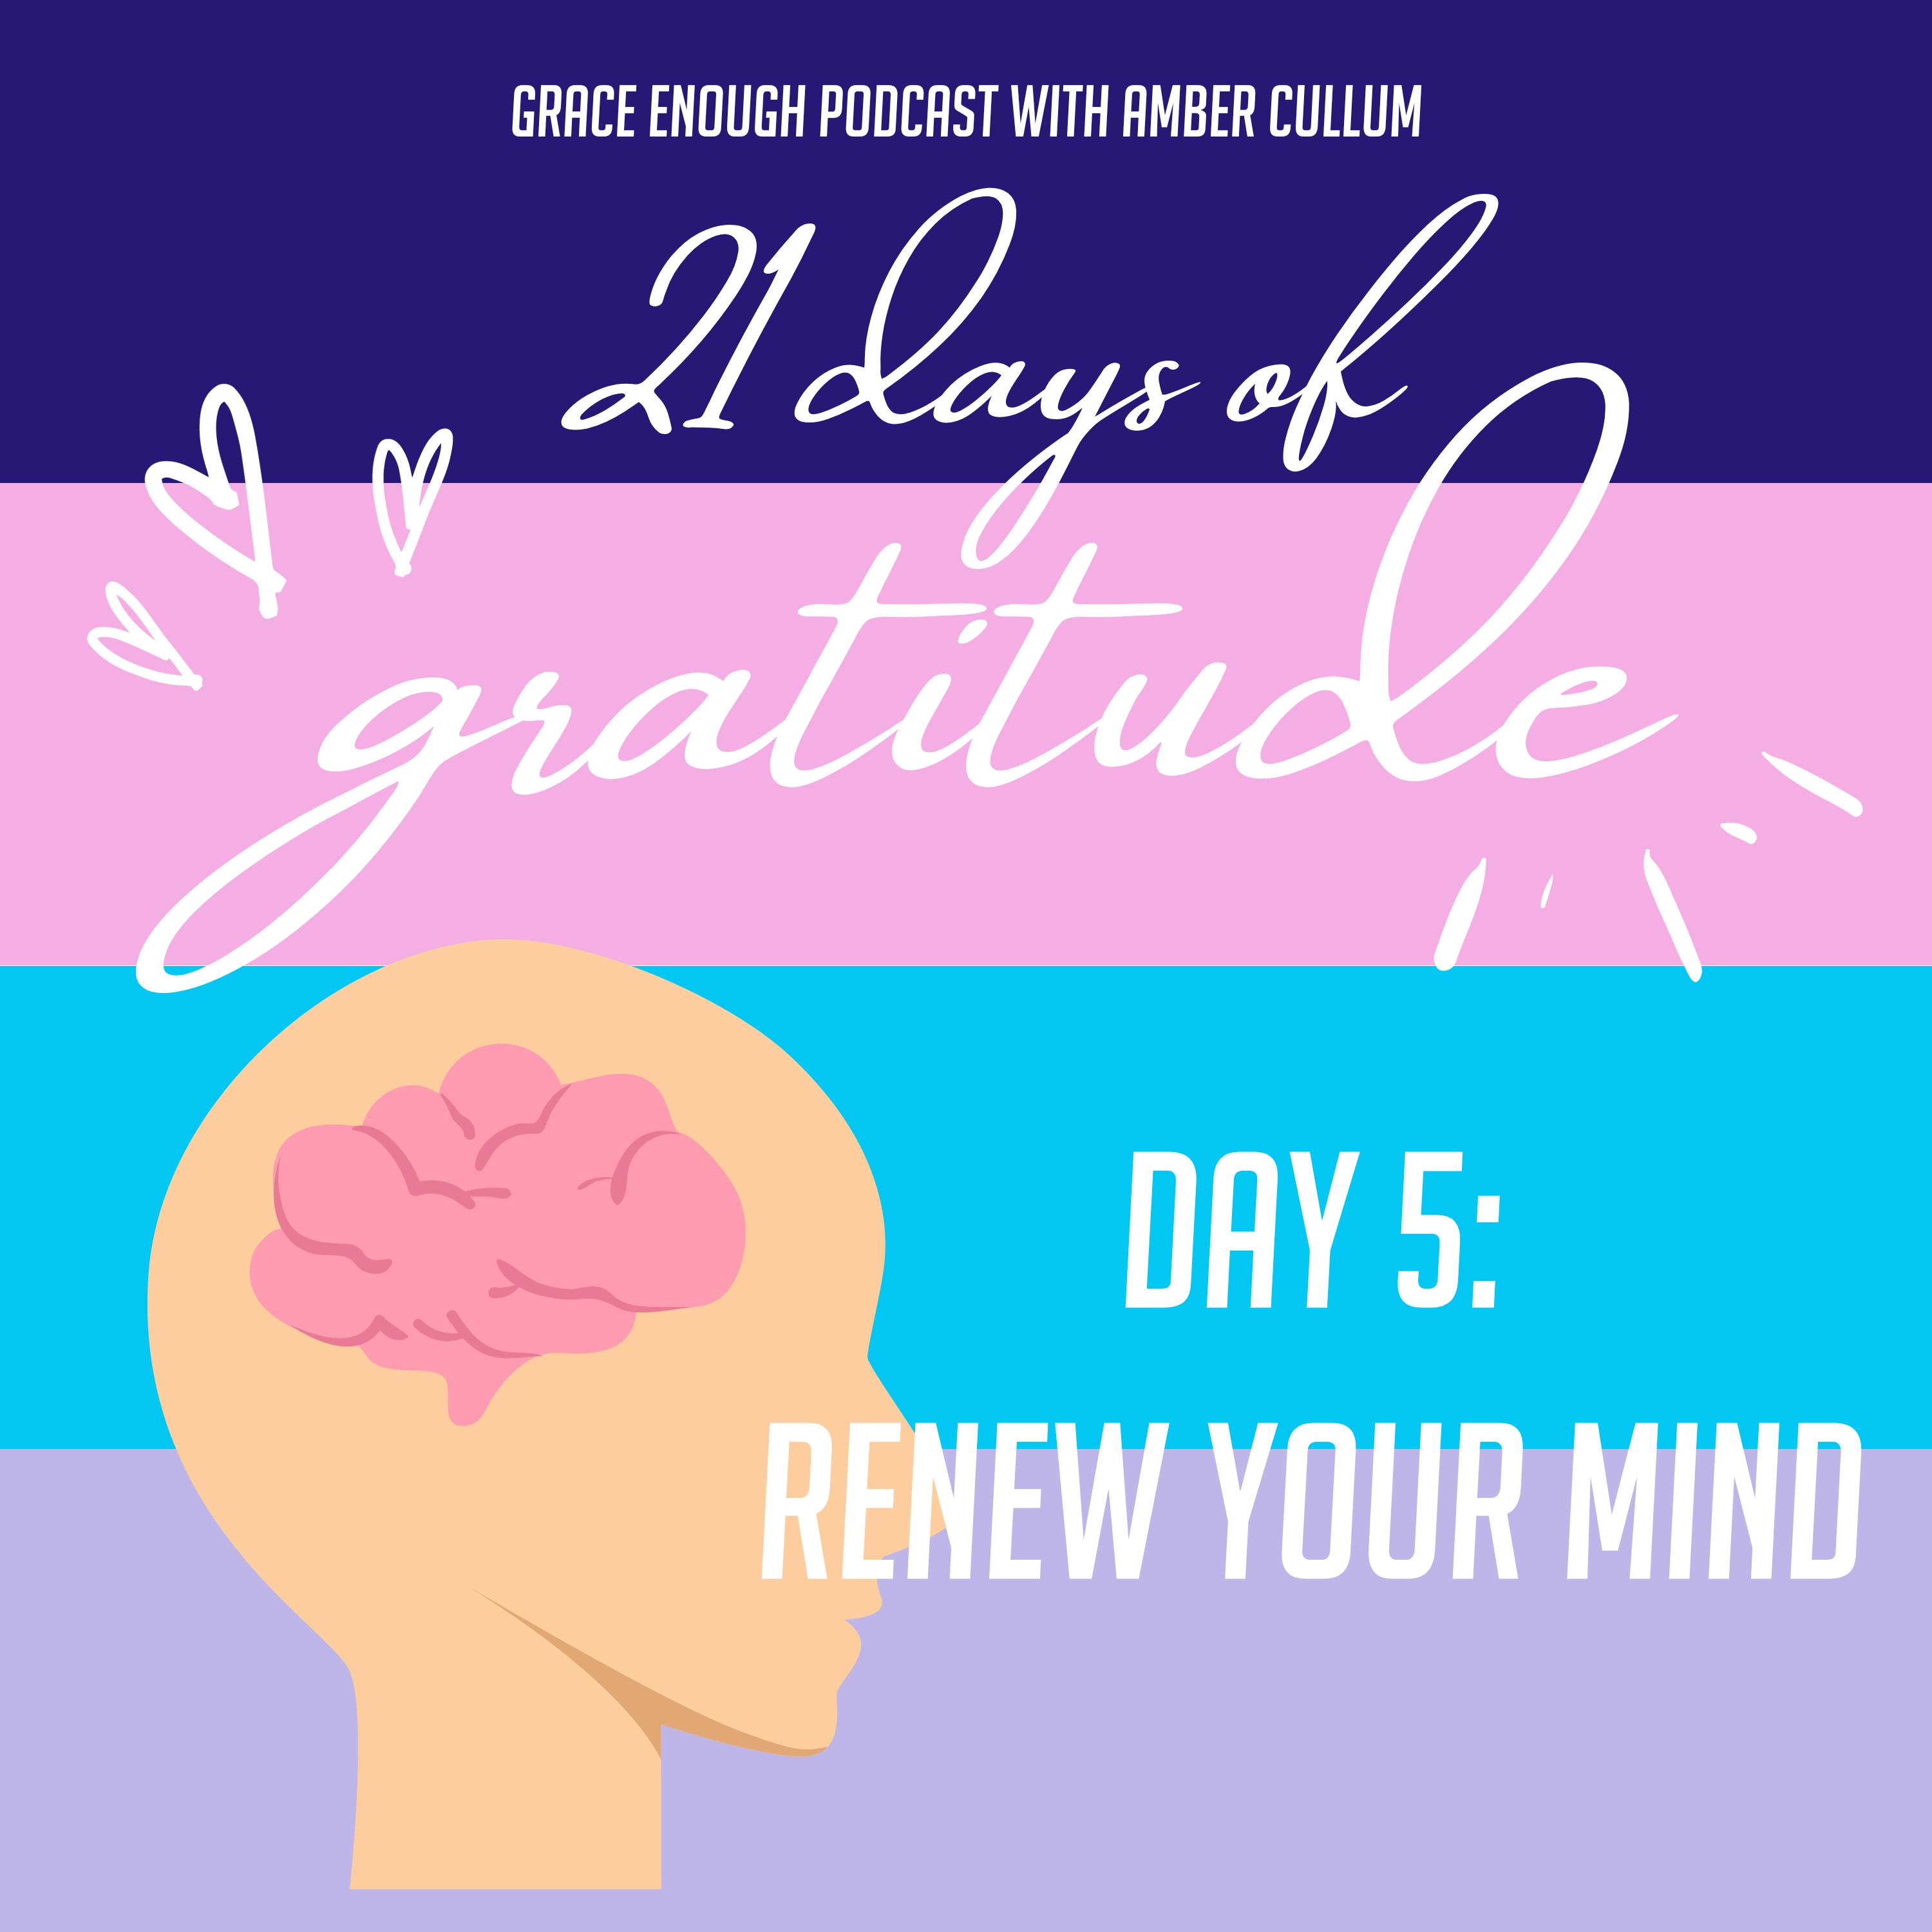 5/21 Days of Gratitude: Renew Your Mind